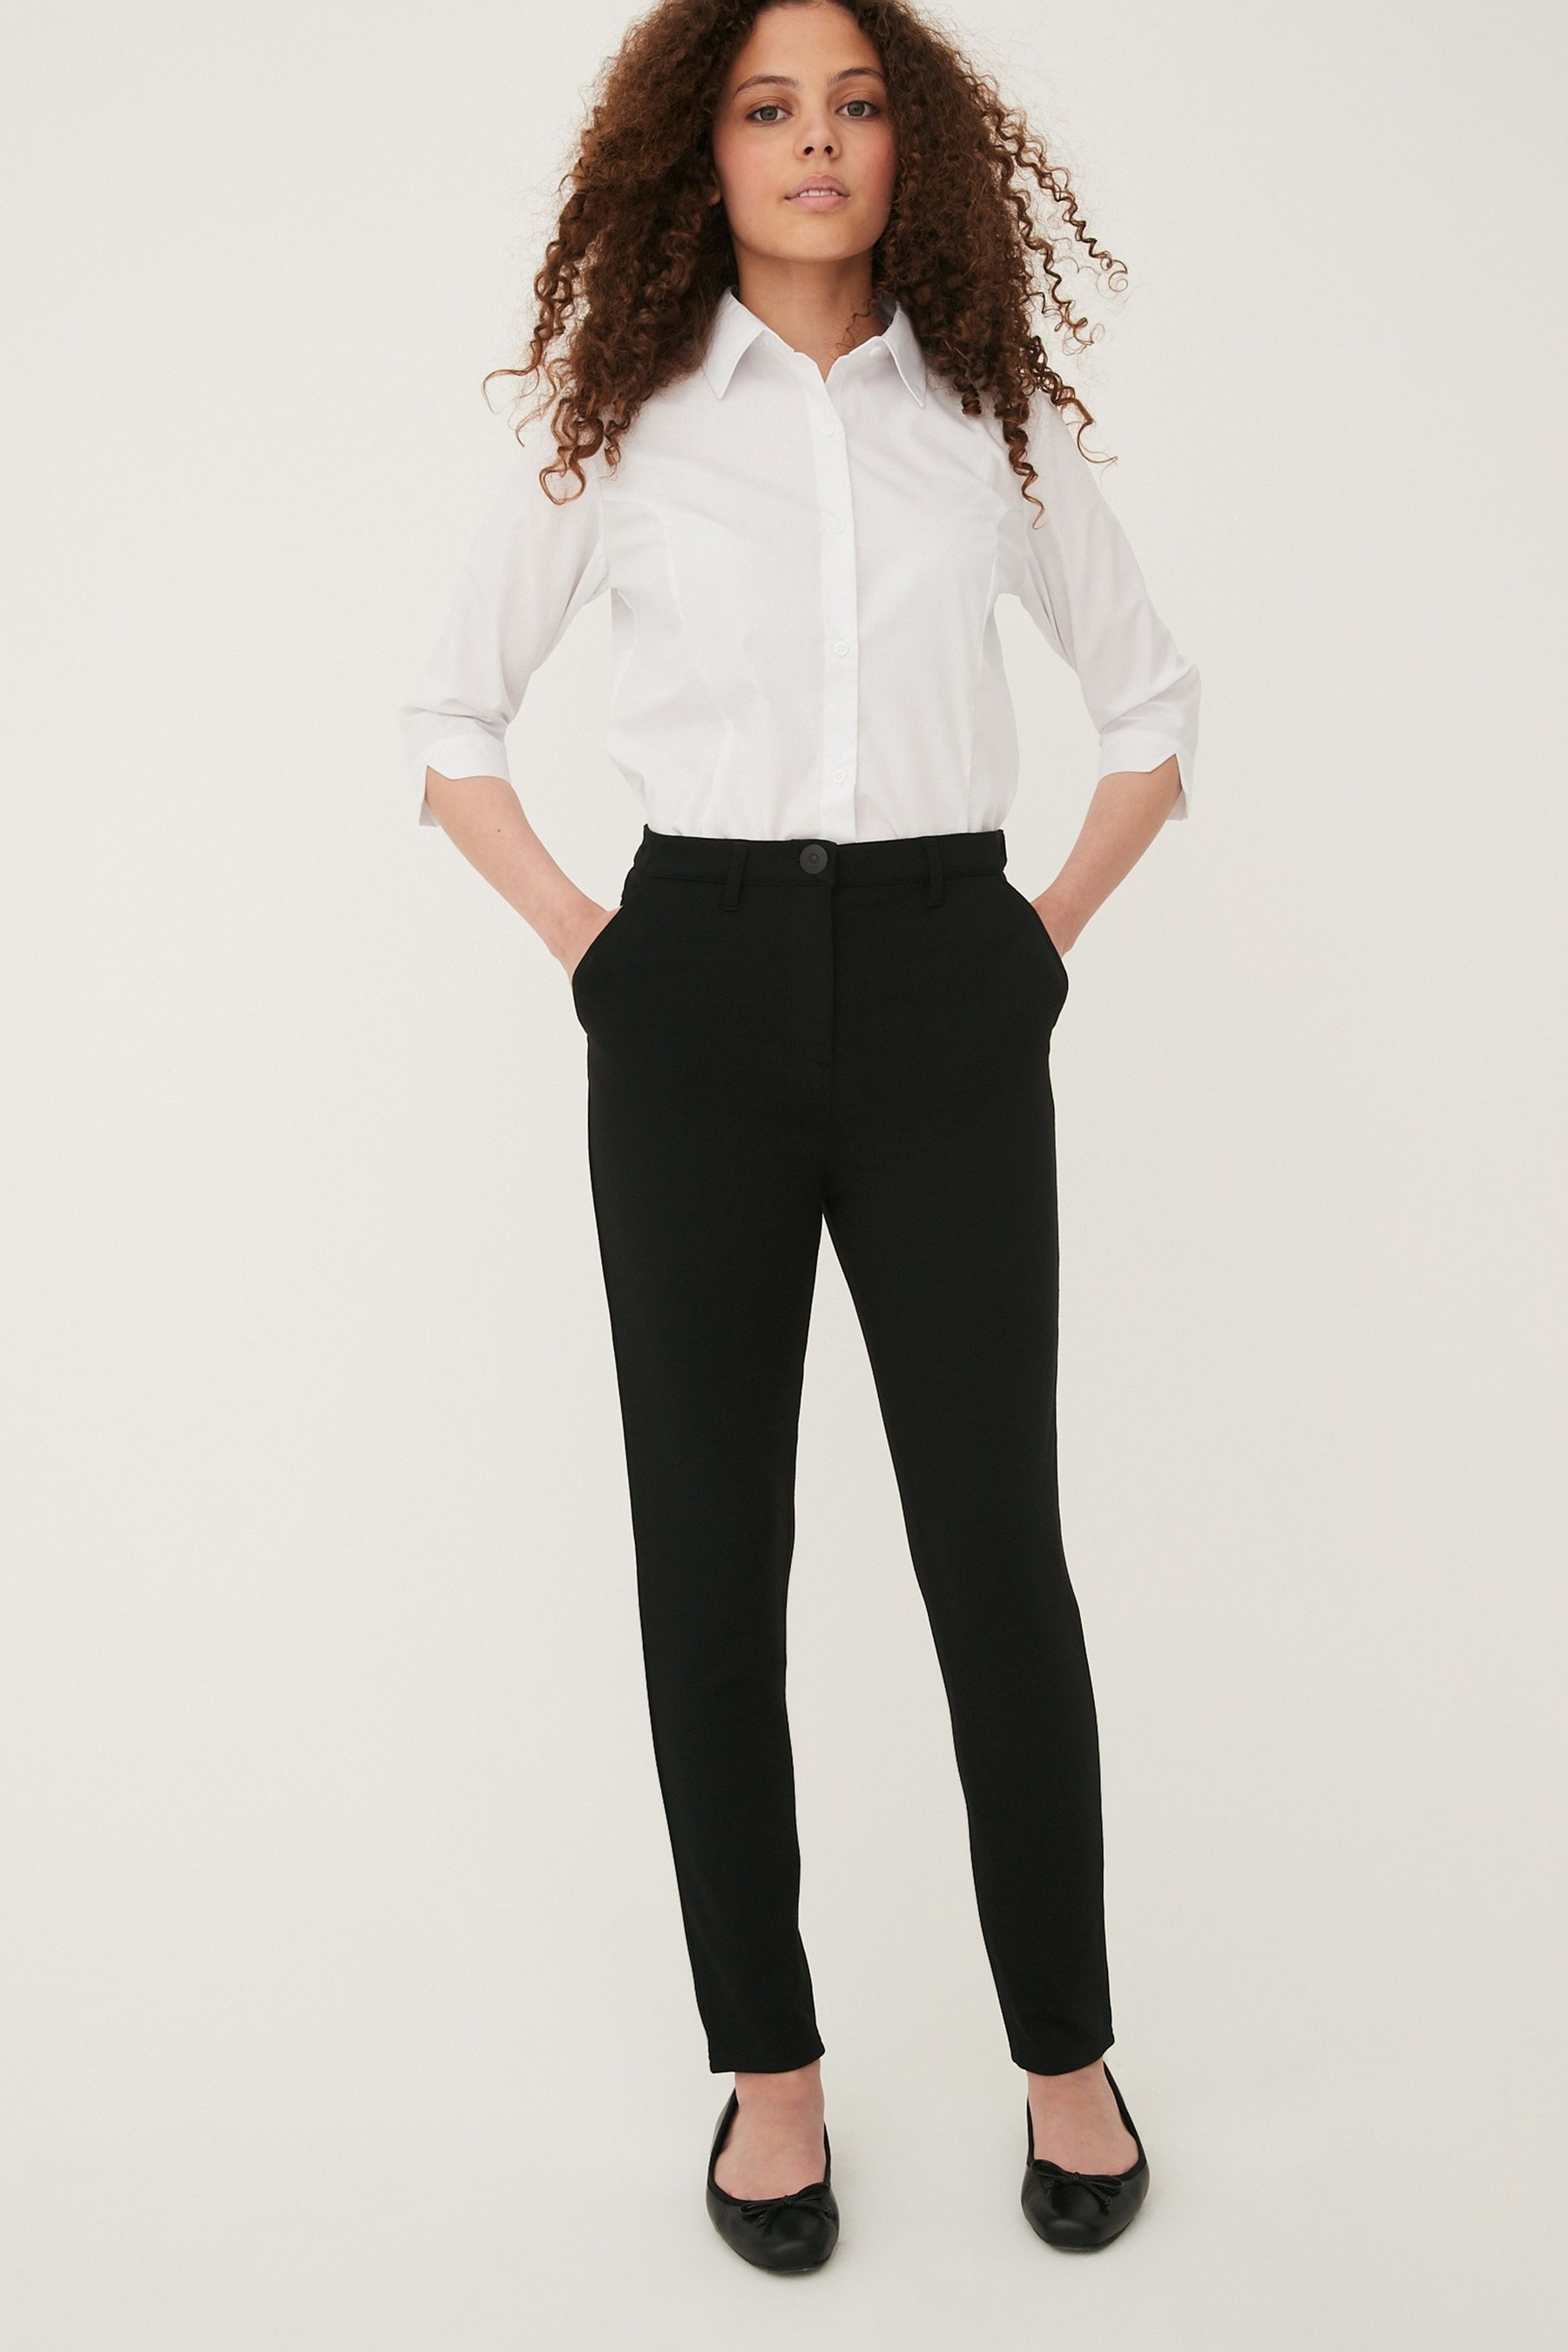 Buy next Girls Black Regular Fit Solid Formal Trousers online  Looksgudin